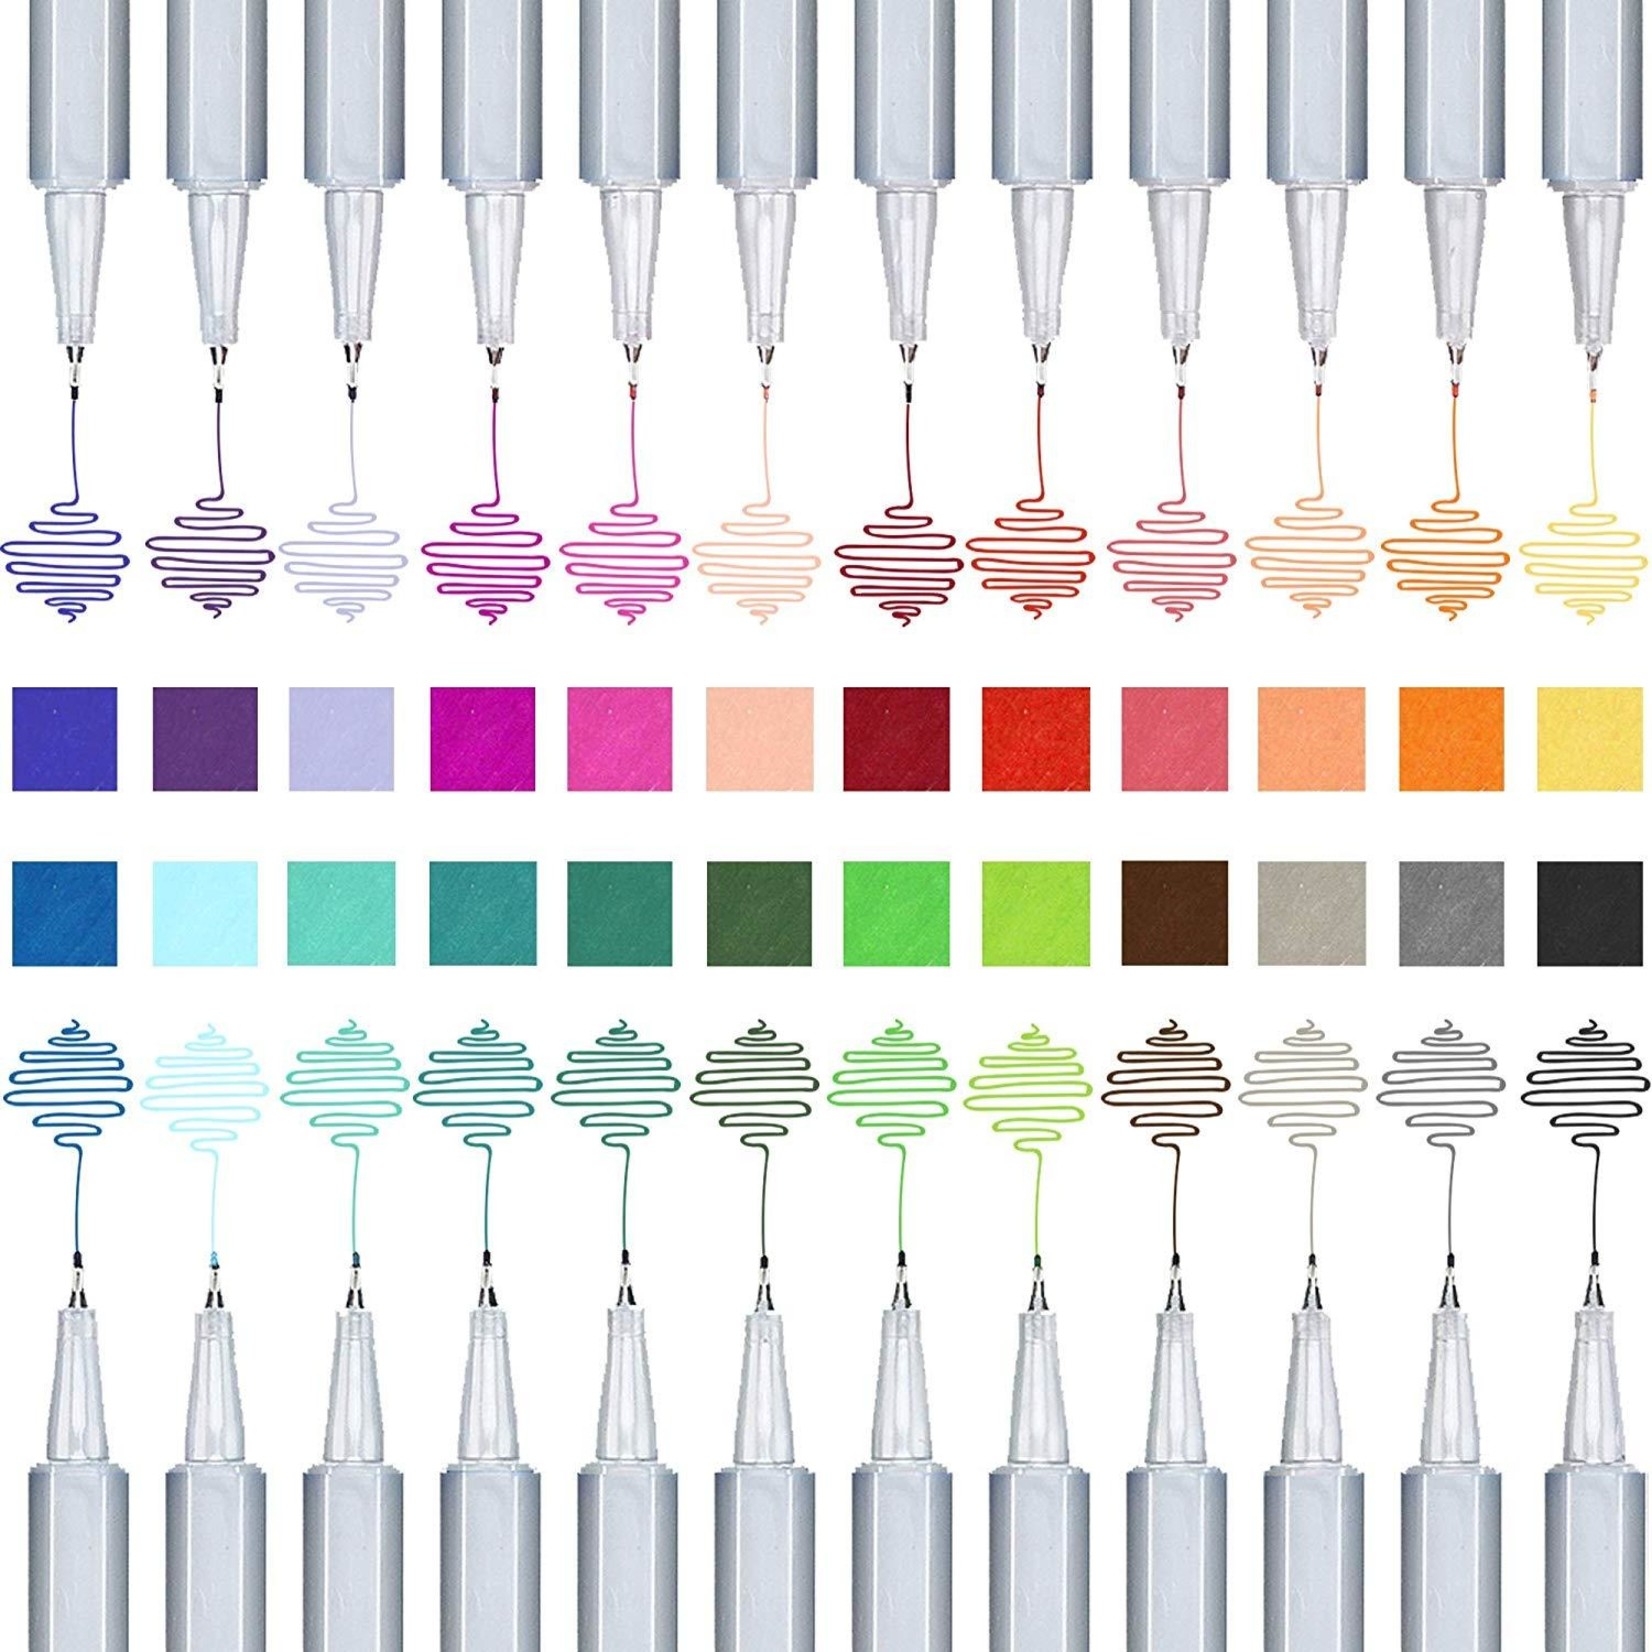 Stationery Island Coloured Fineliner Pens - Set of 24